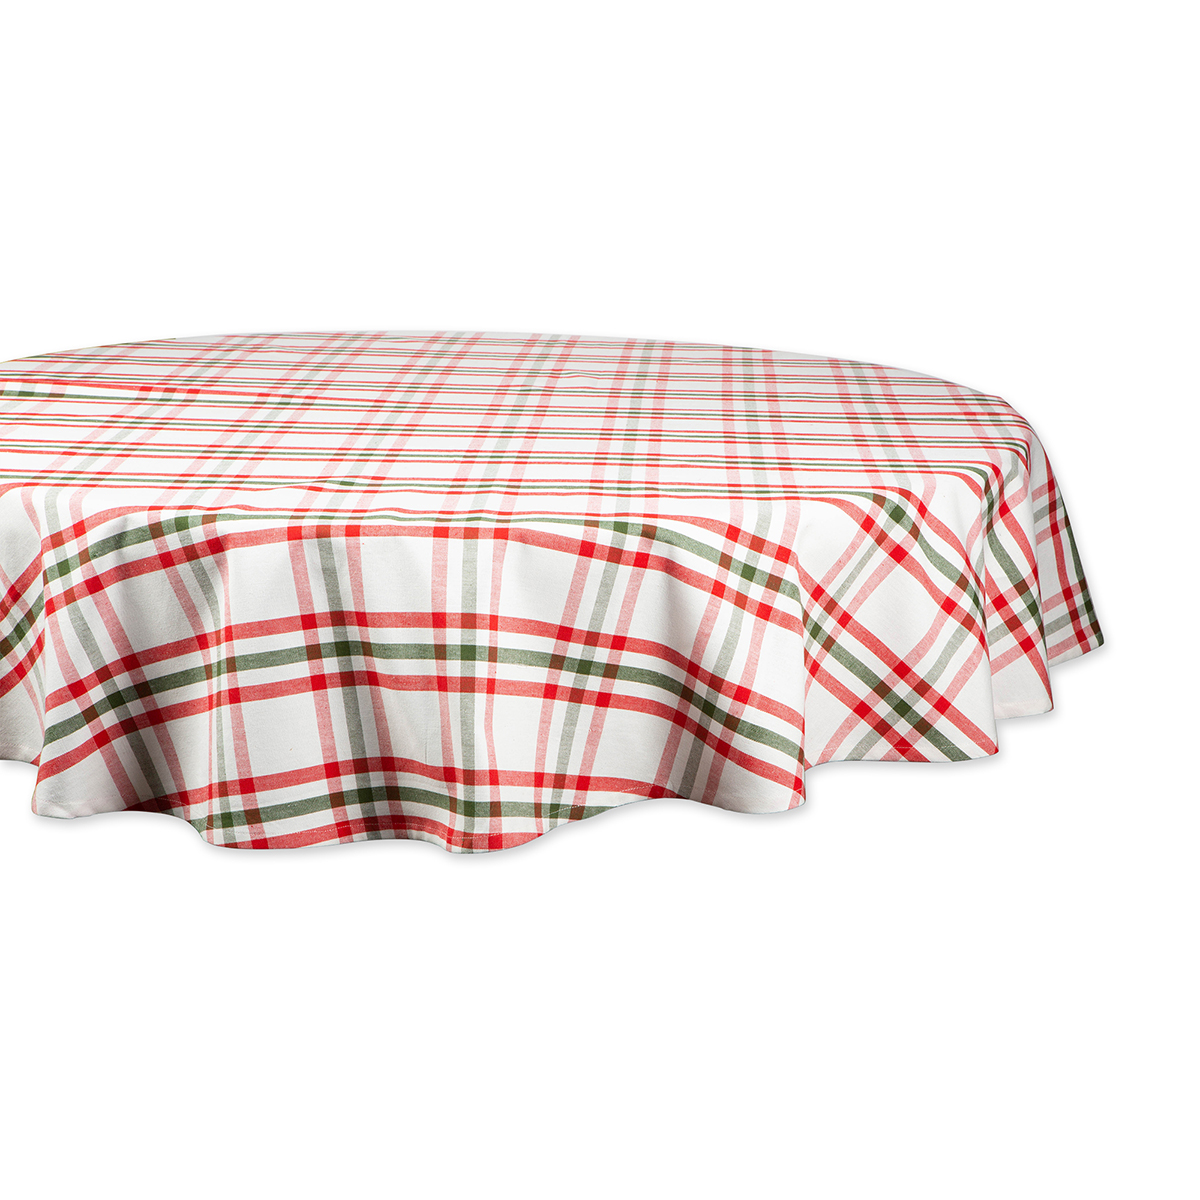 DII(R) Nutcracker Plaid Tablecloth